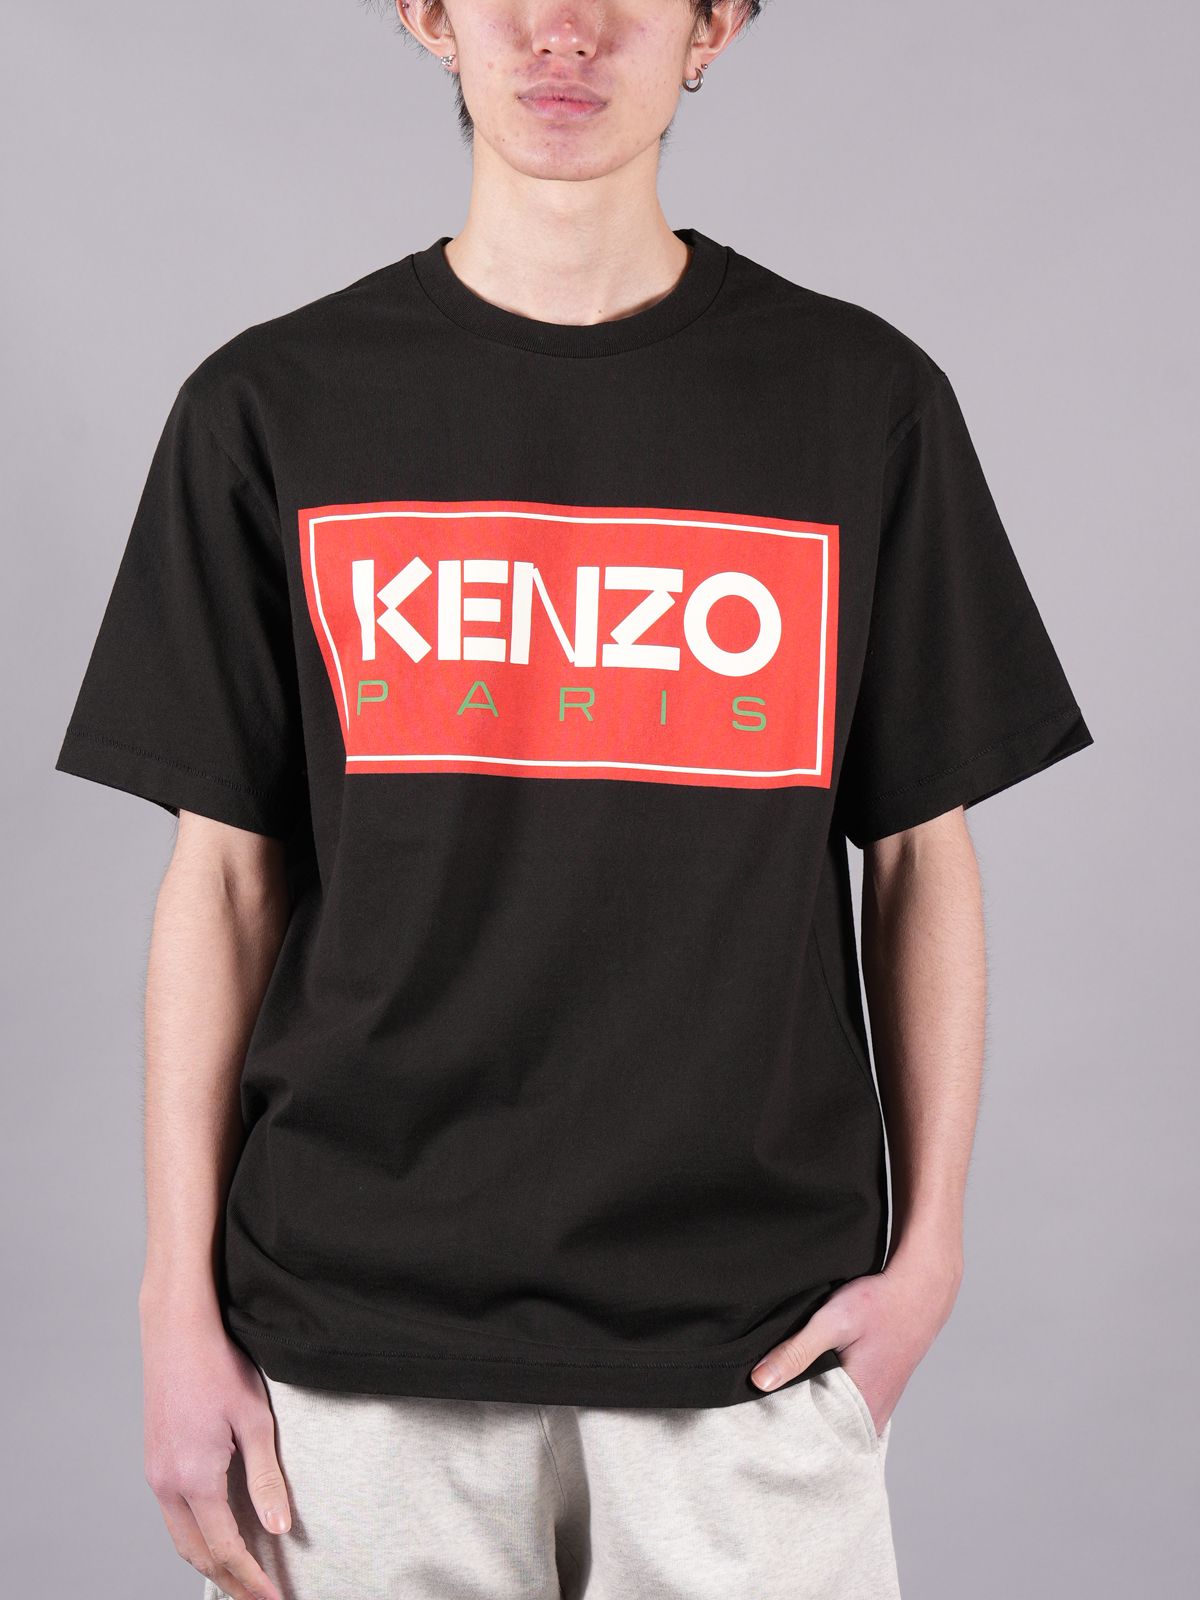 KENZO - 【ラスト1点】 Tricolor Kenzo Paris Tee / ケンゾー パリ